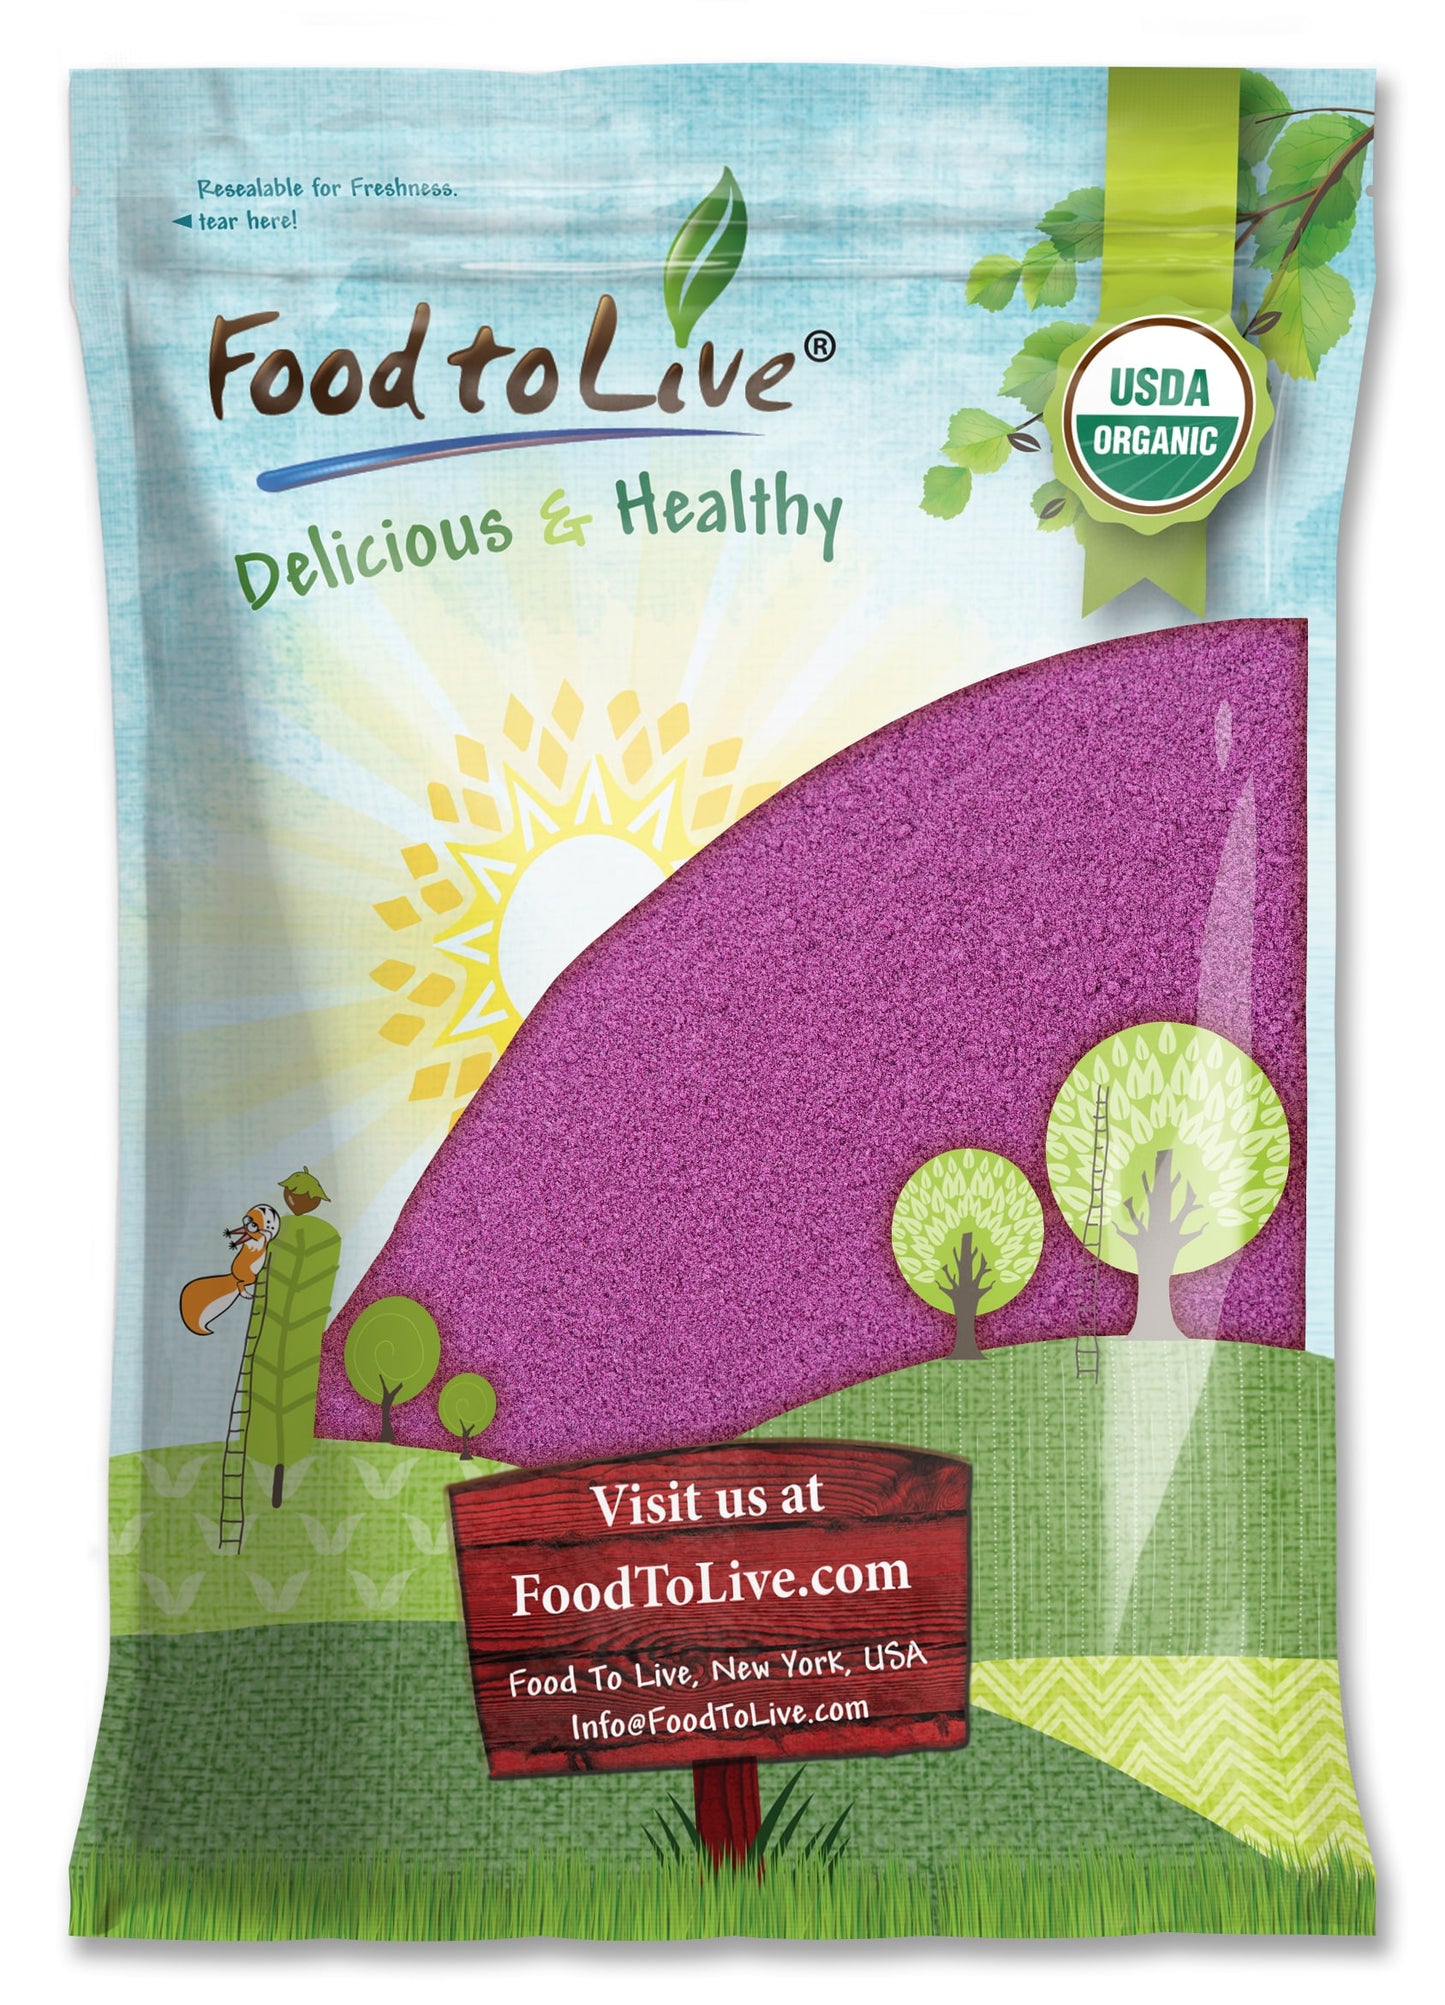 Organic Purple Sweet Potato Powder – Non-GMO, 100% Pure, No Sugar Added. Vegan